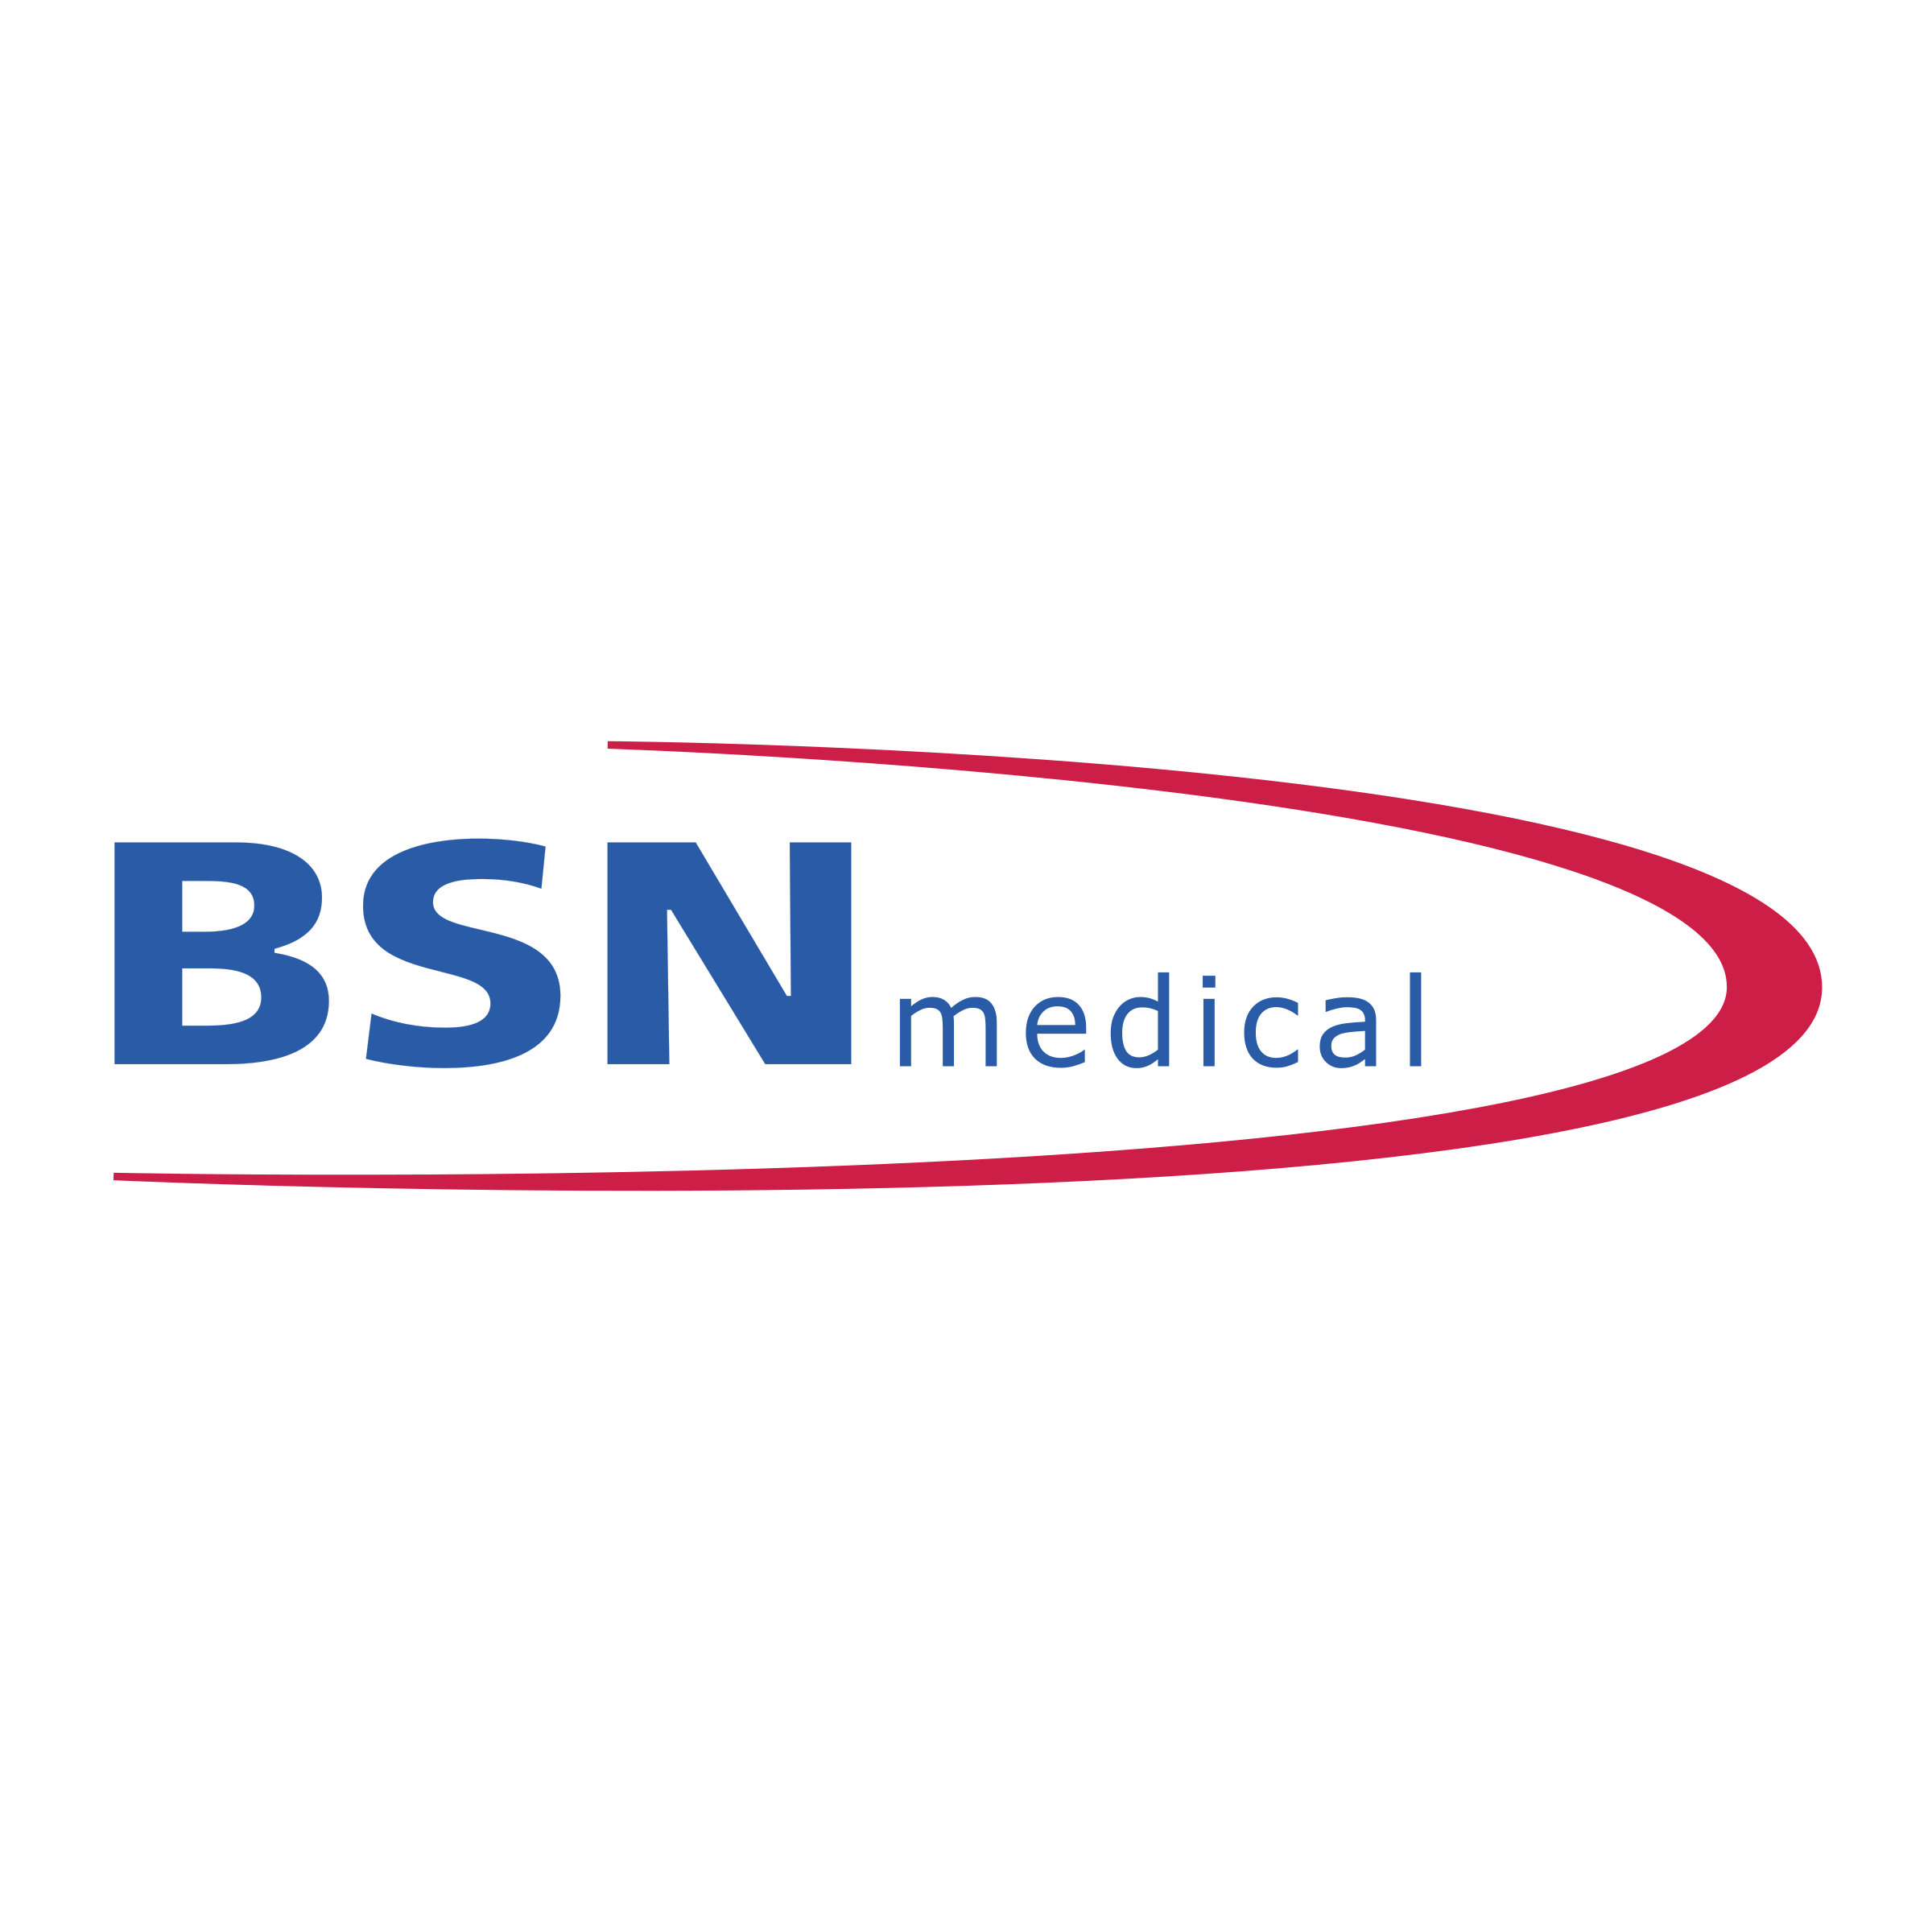 BSN Logo - BSN Medical Logo PNG Transparent & SVG Vector - Freebie Supply